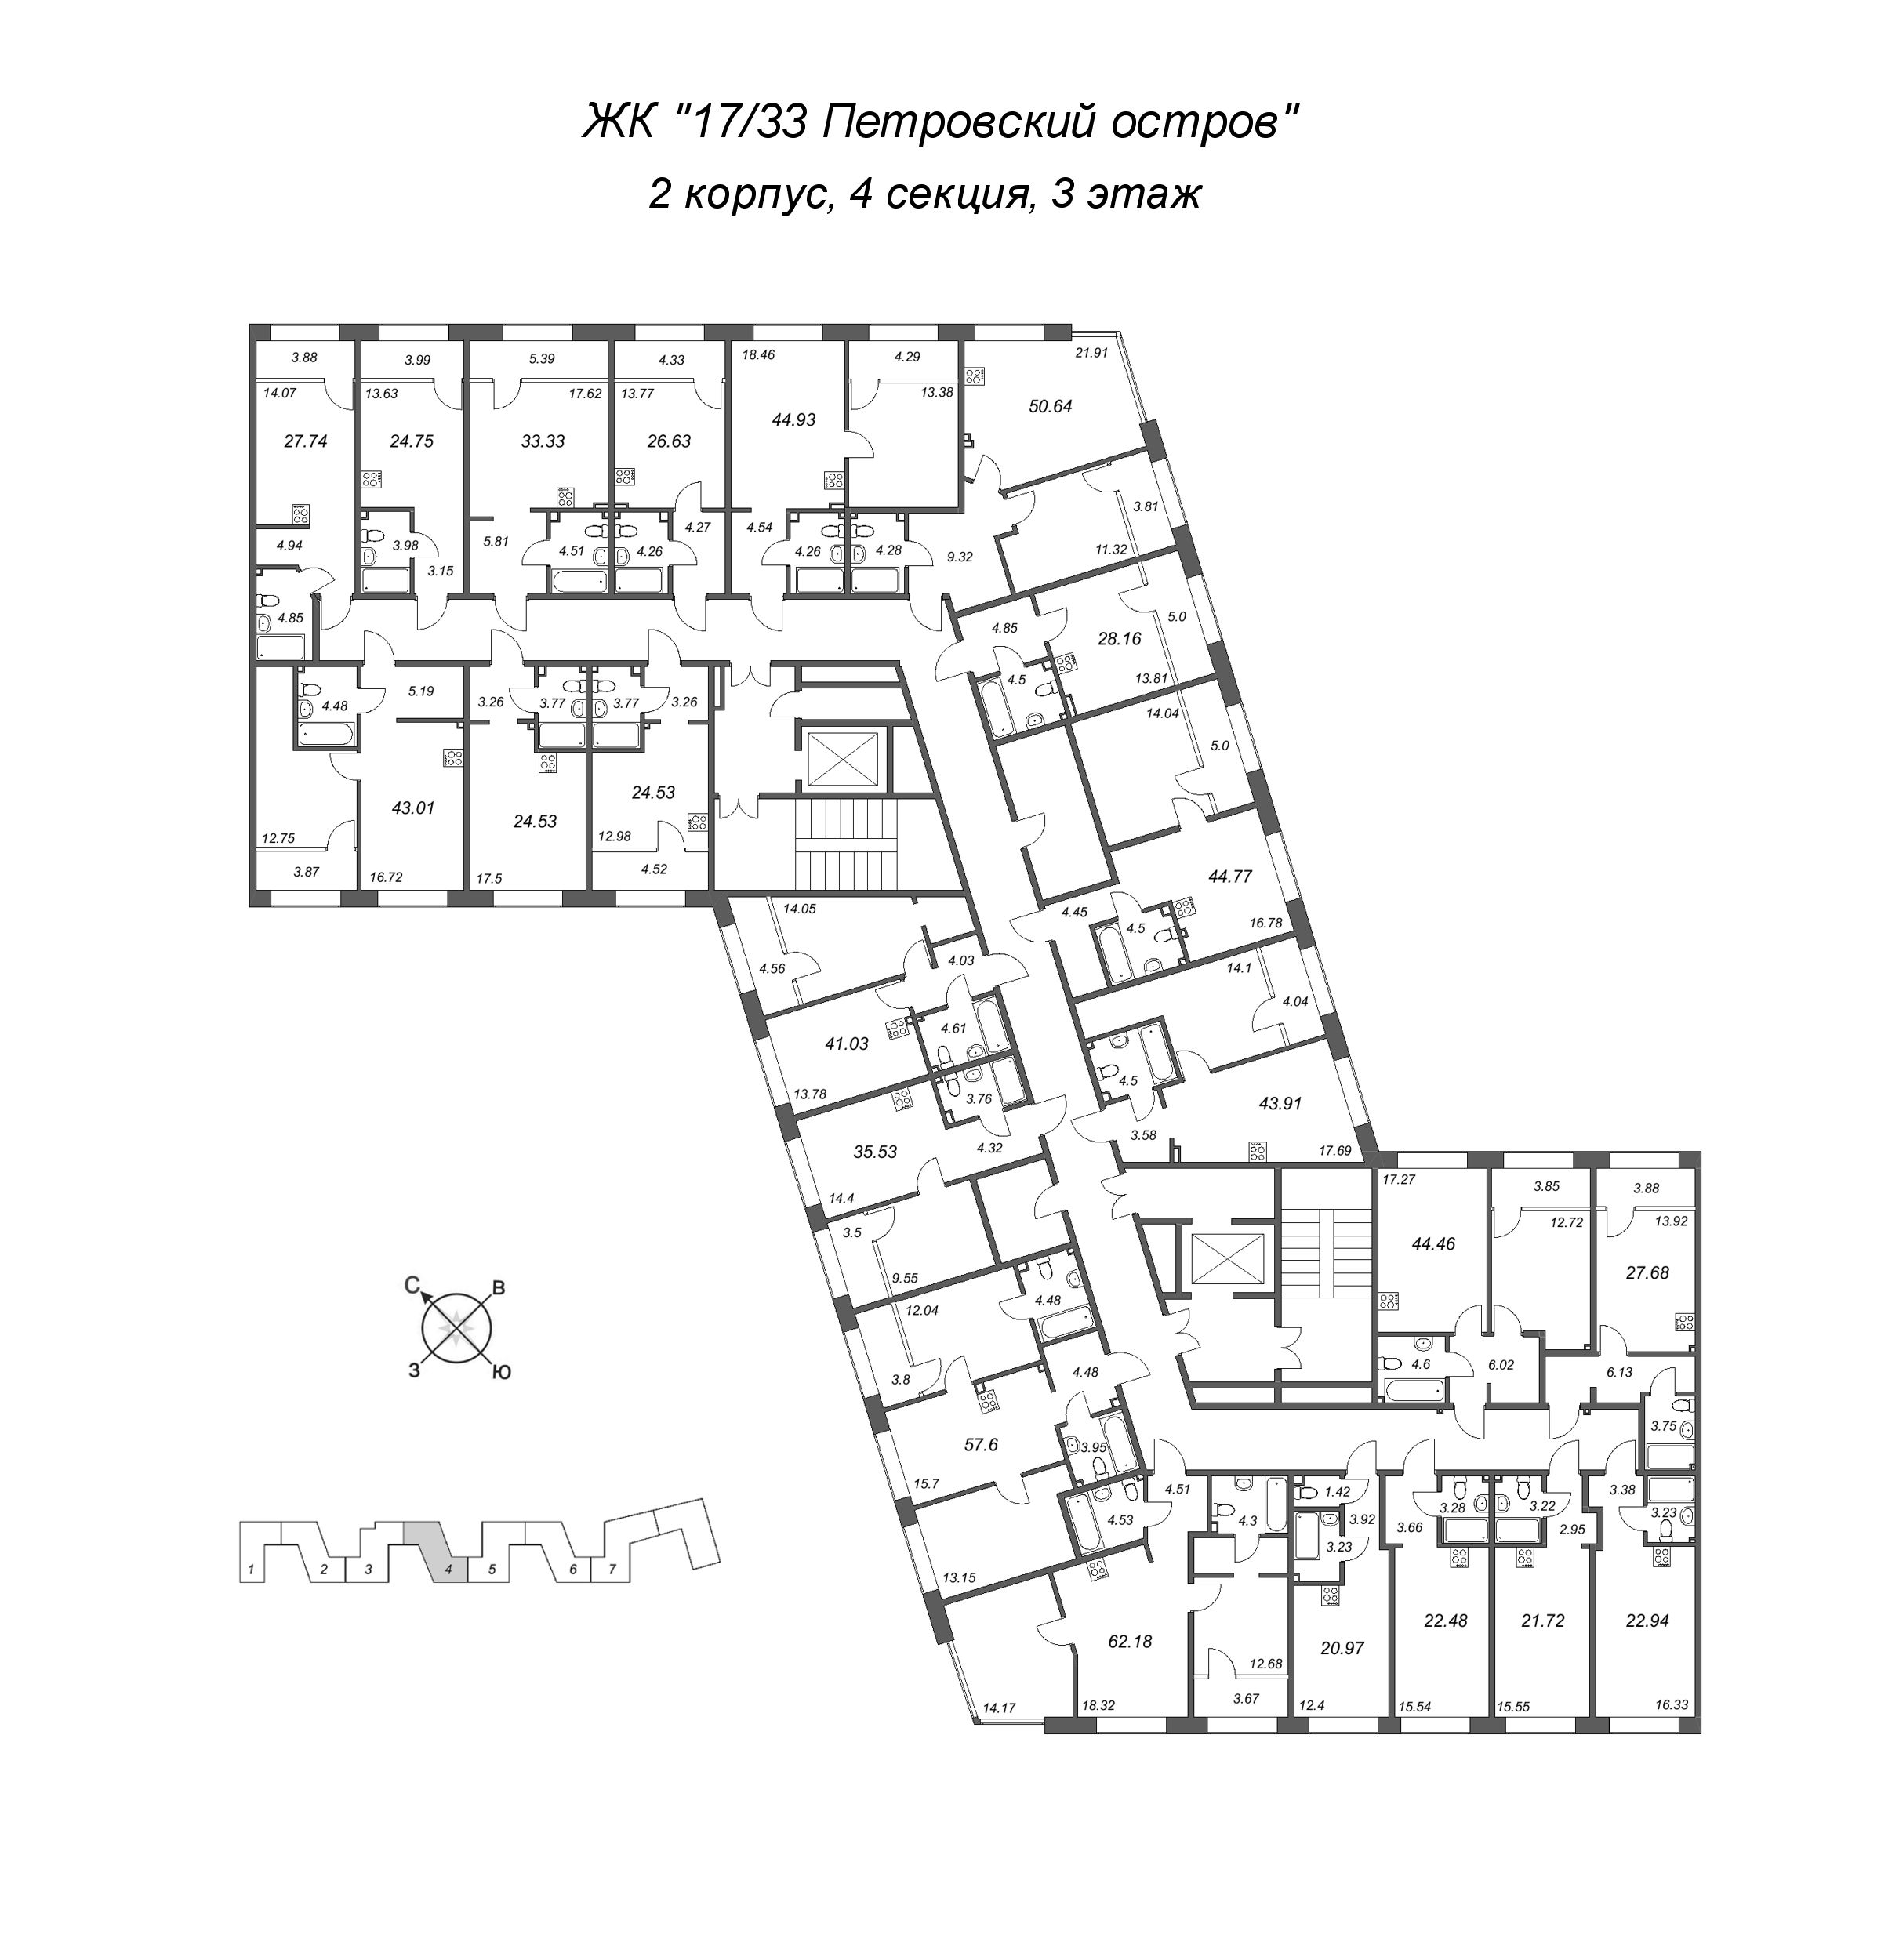 2-комнатная (Евро) квартира, 43.91 м² - планировка этажа